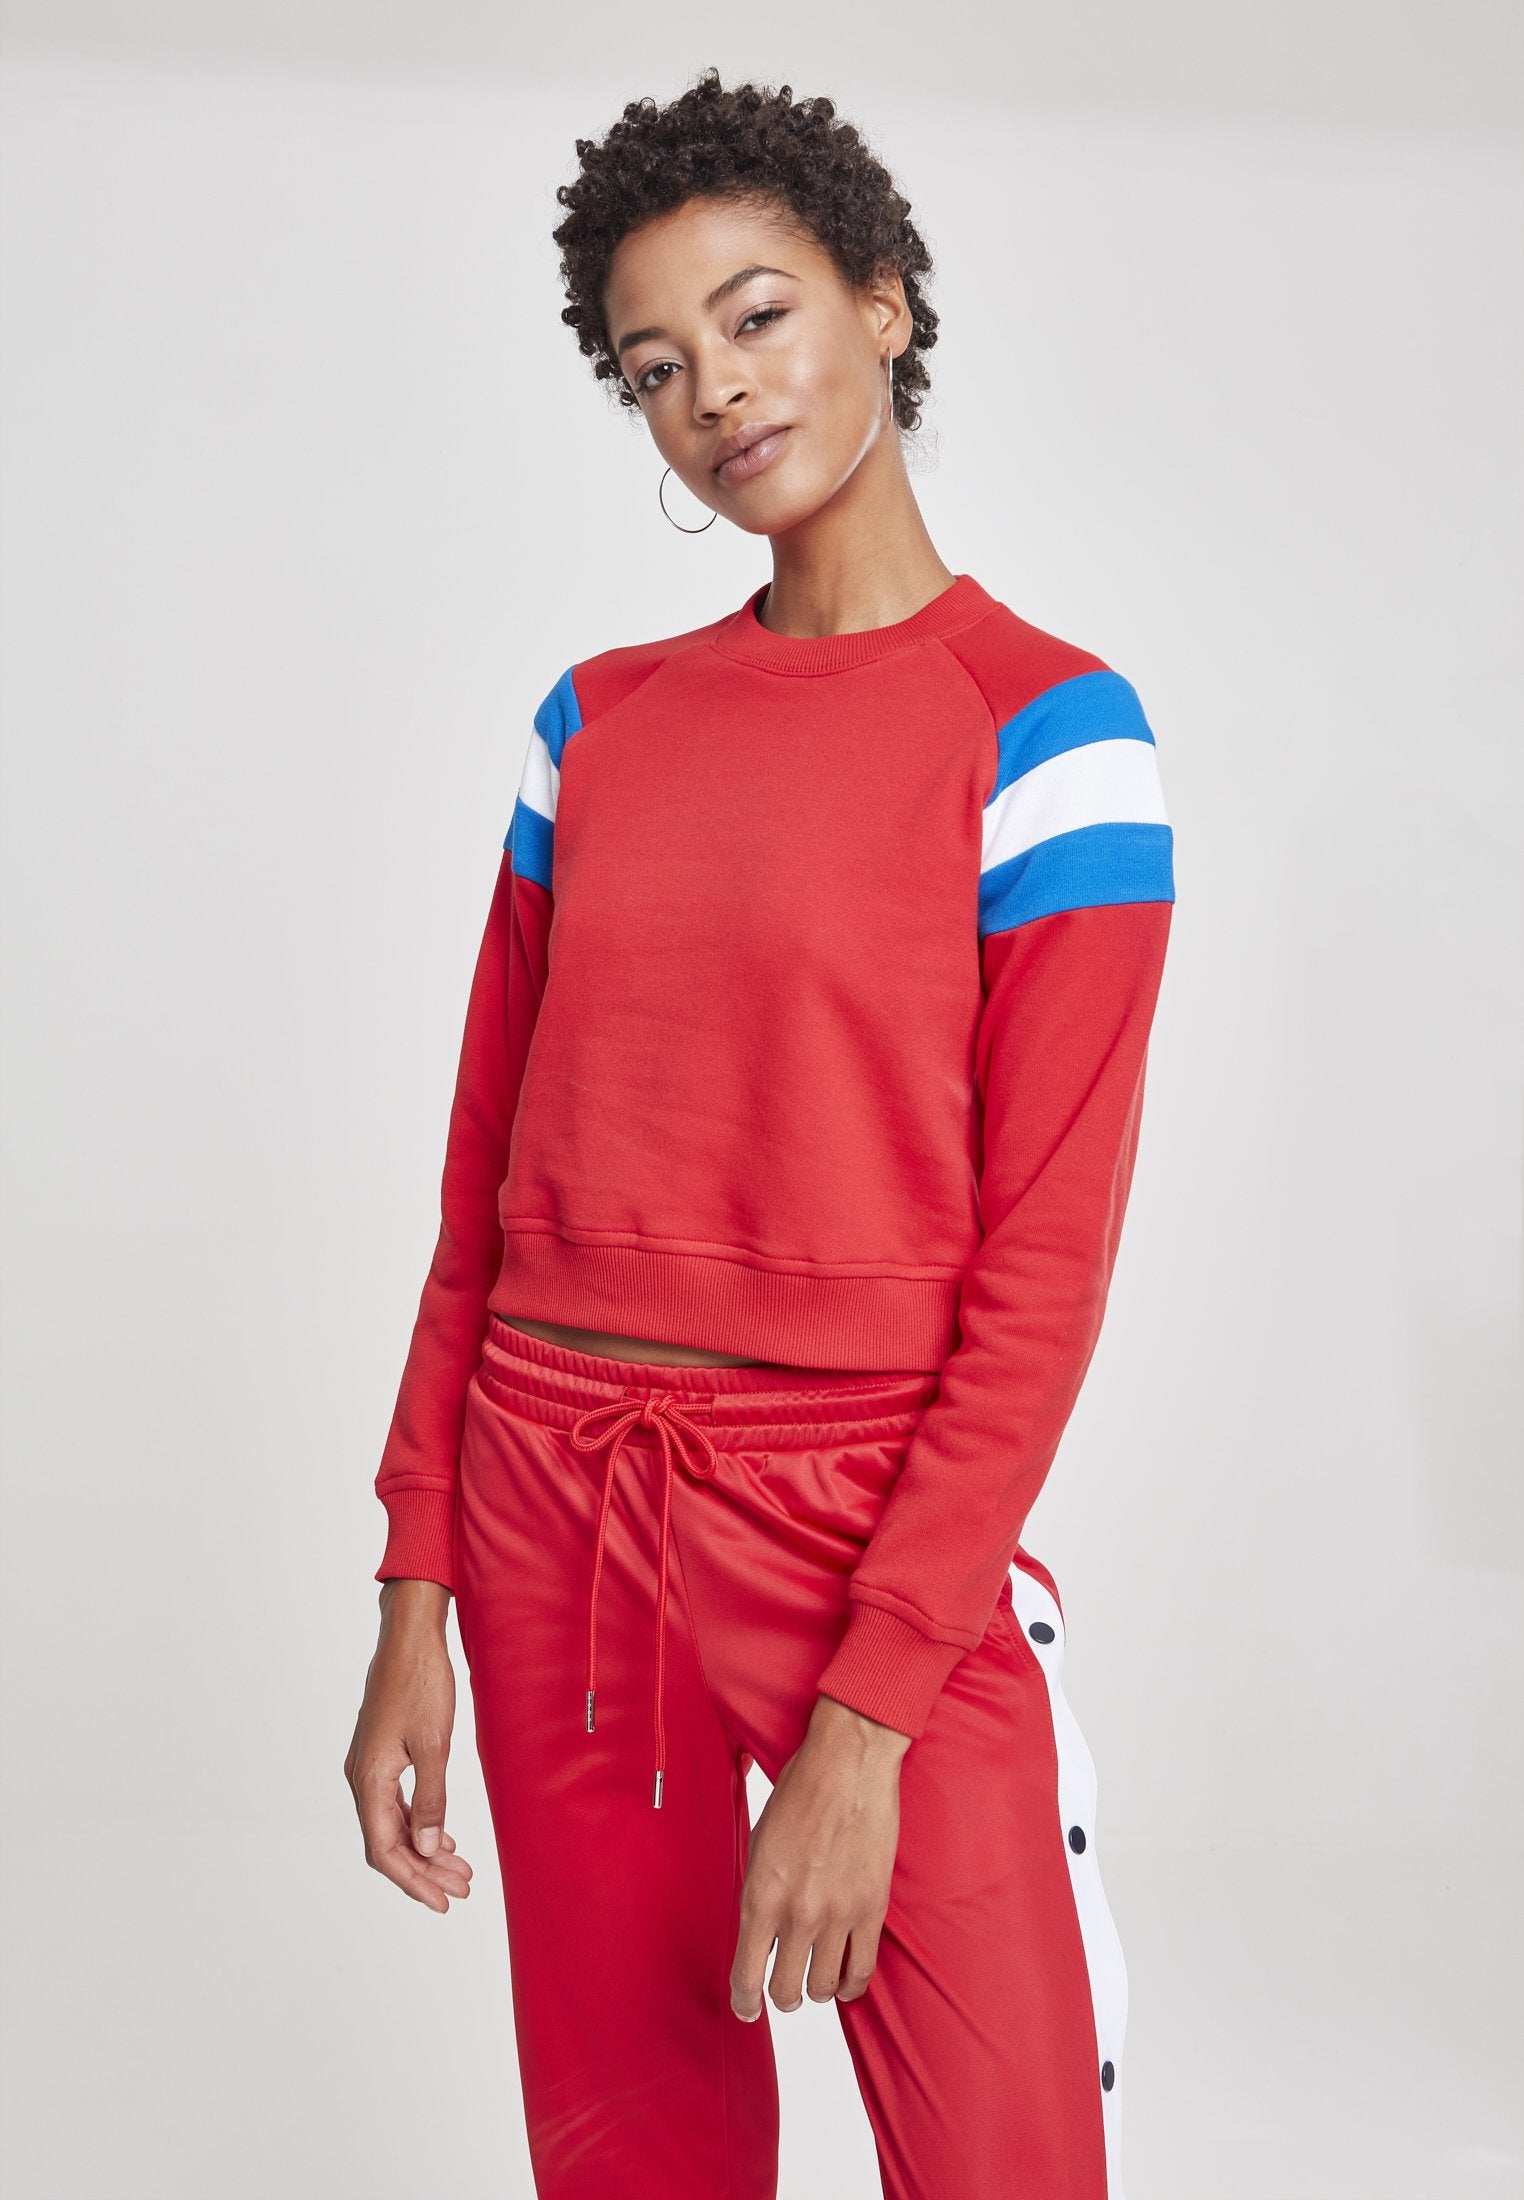 Urban Classics Damen Sleeve Stripe Crew-Street-& Sportswear Aurich - Shirts & Tops